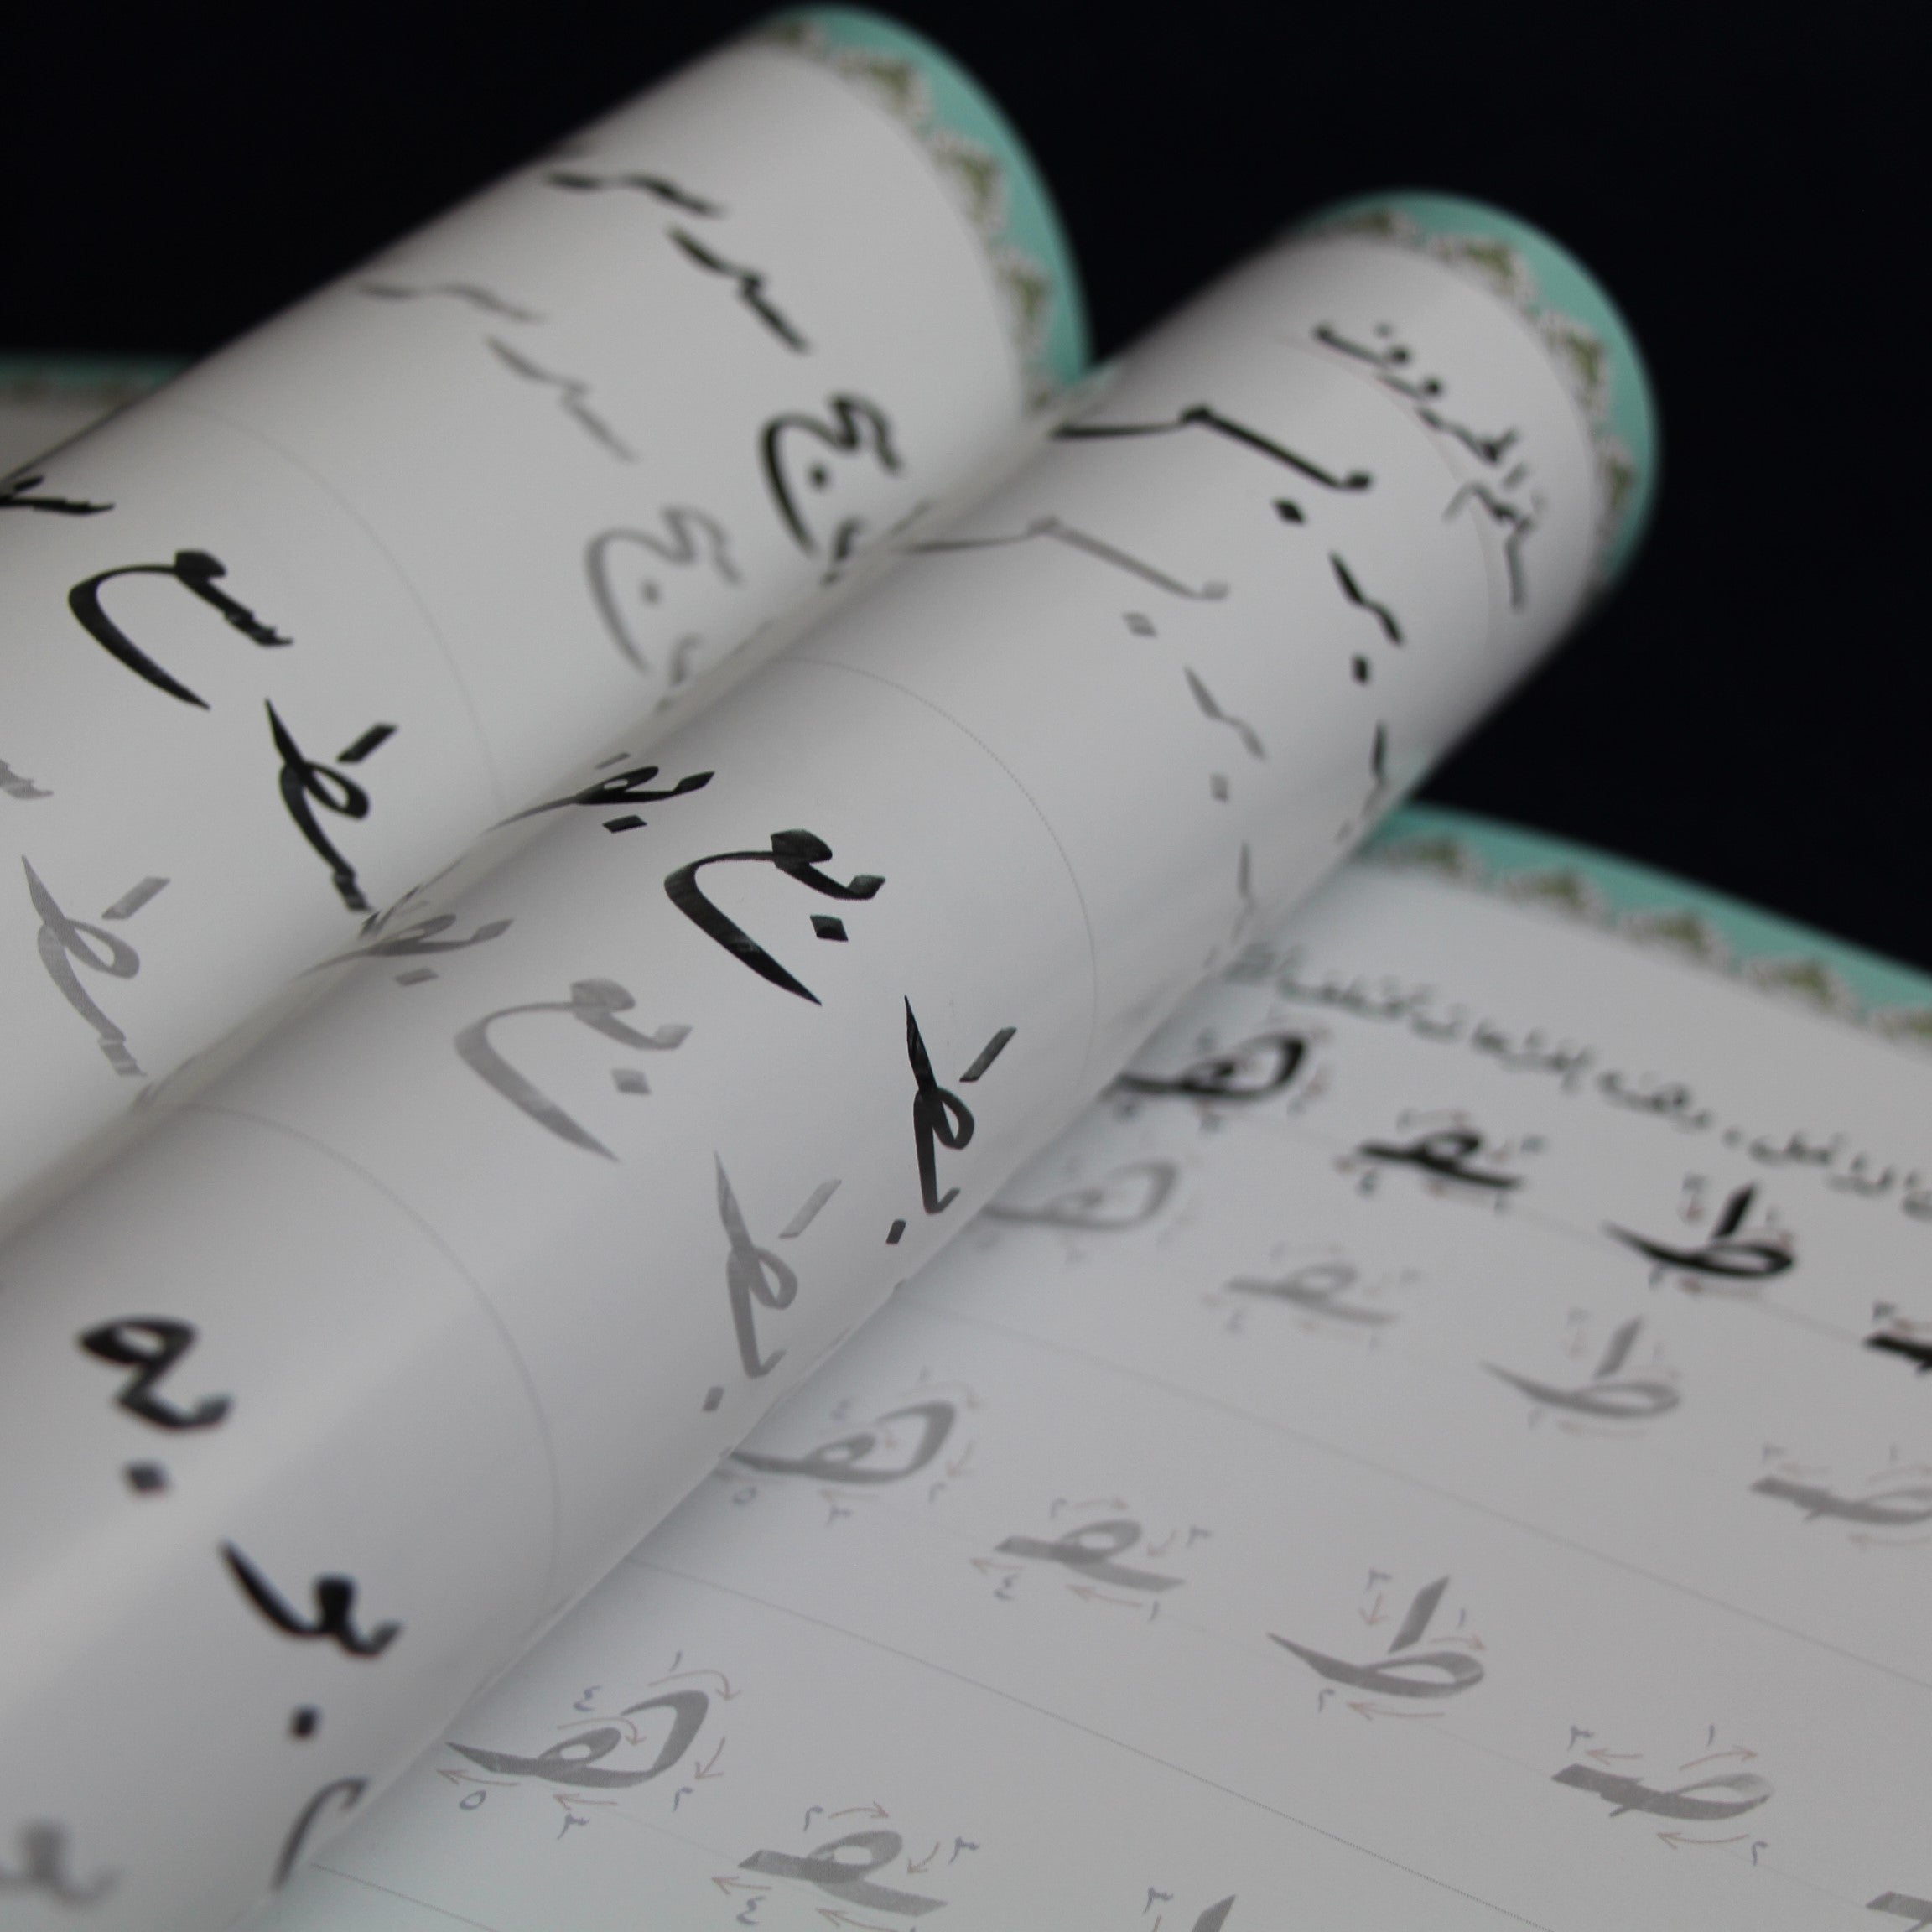 Arabic calligraphy workbook for Ruq'a script - Mukhtar 'Alam